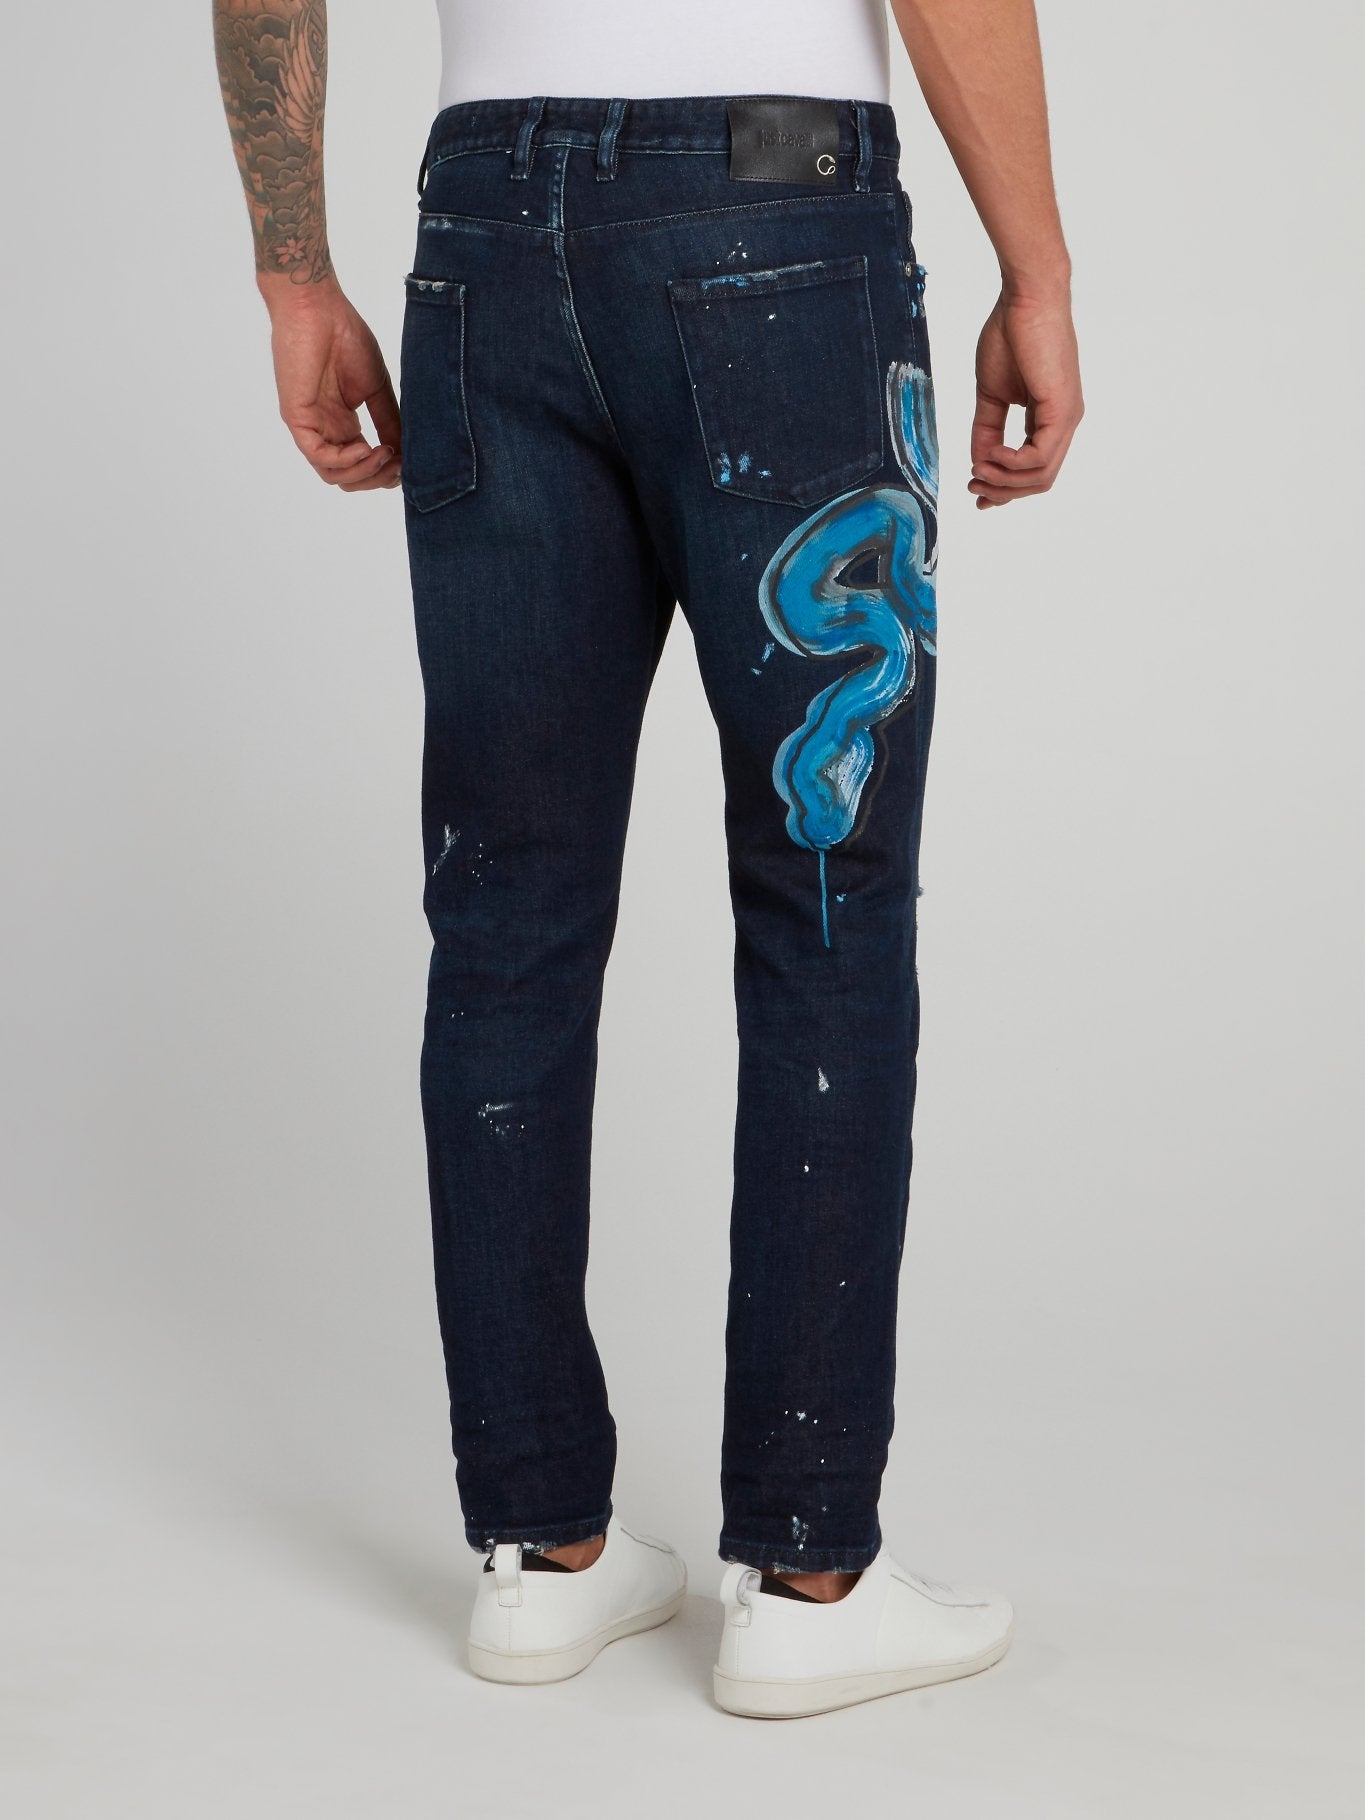 Snake Paint Distressed Denim Jeans